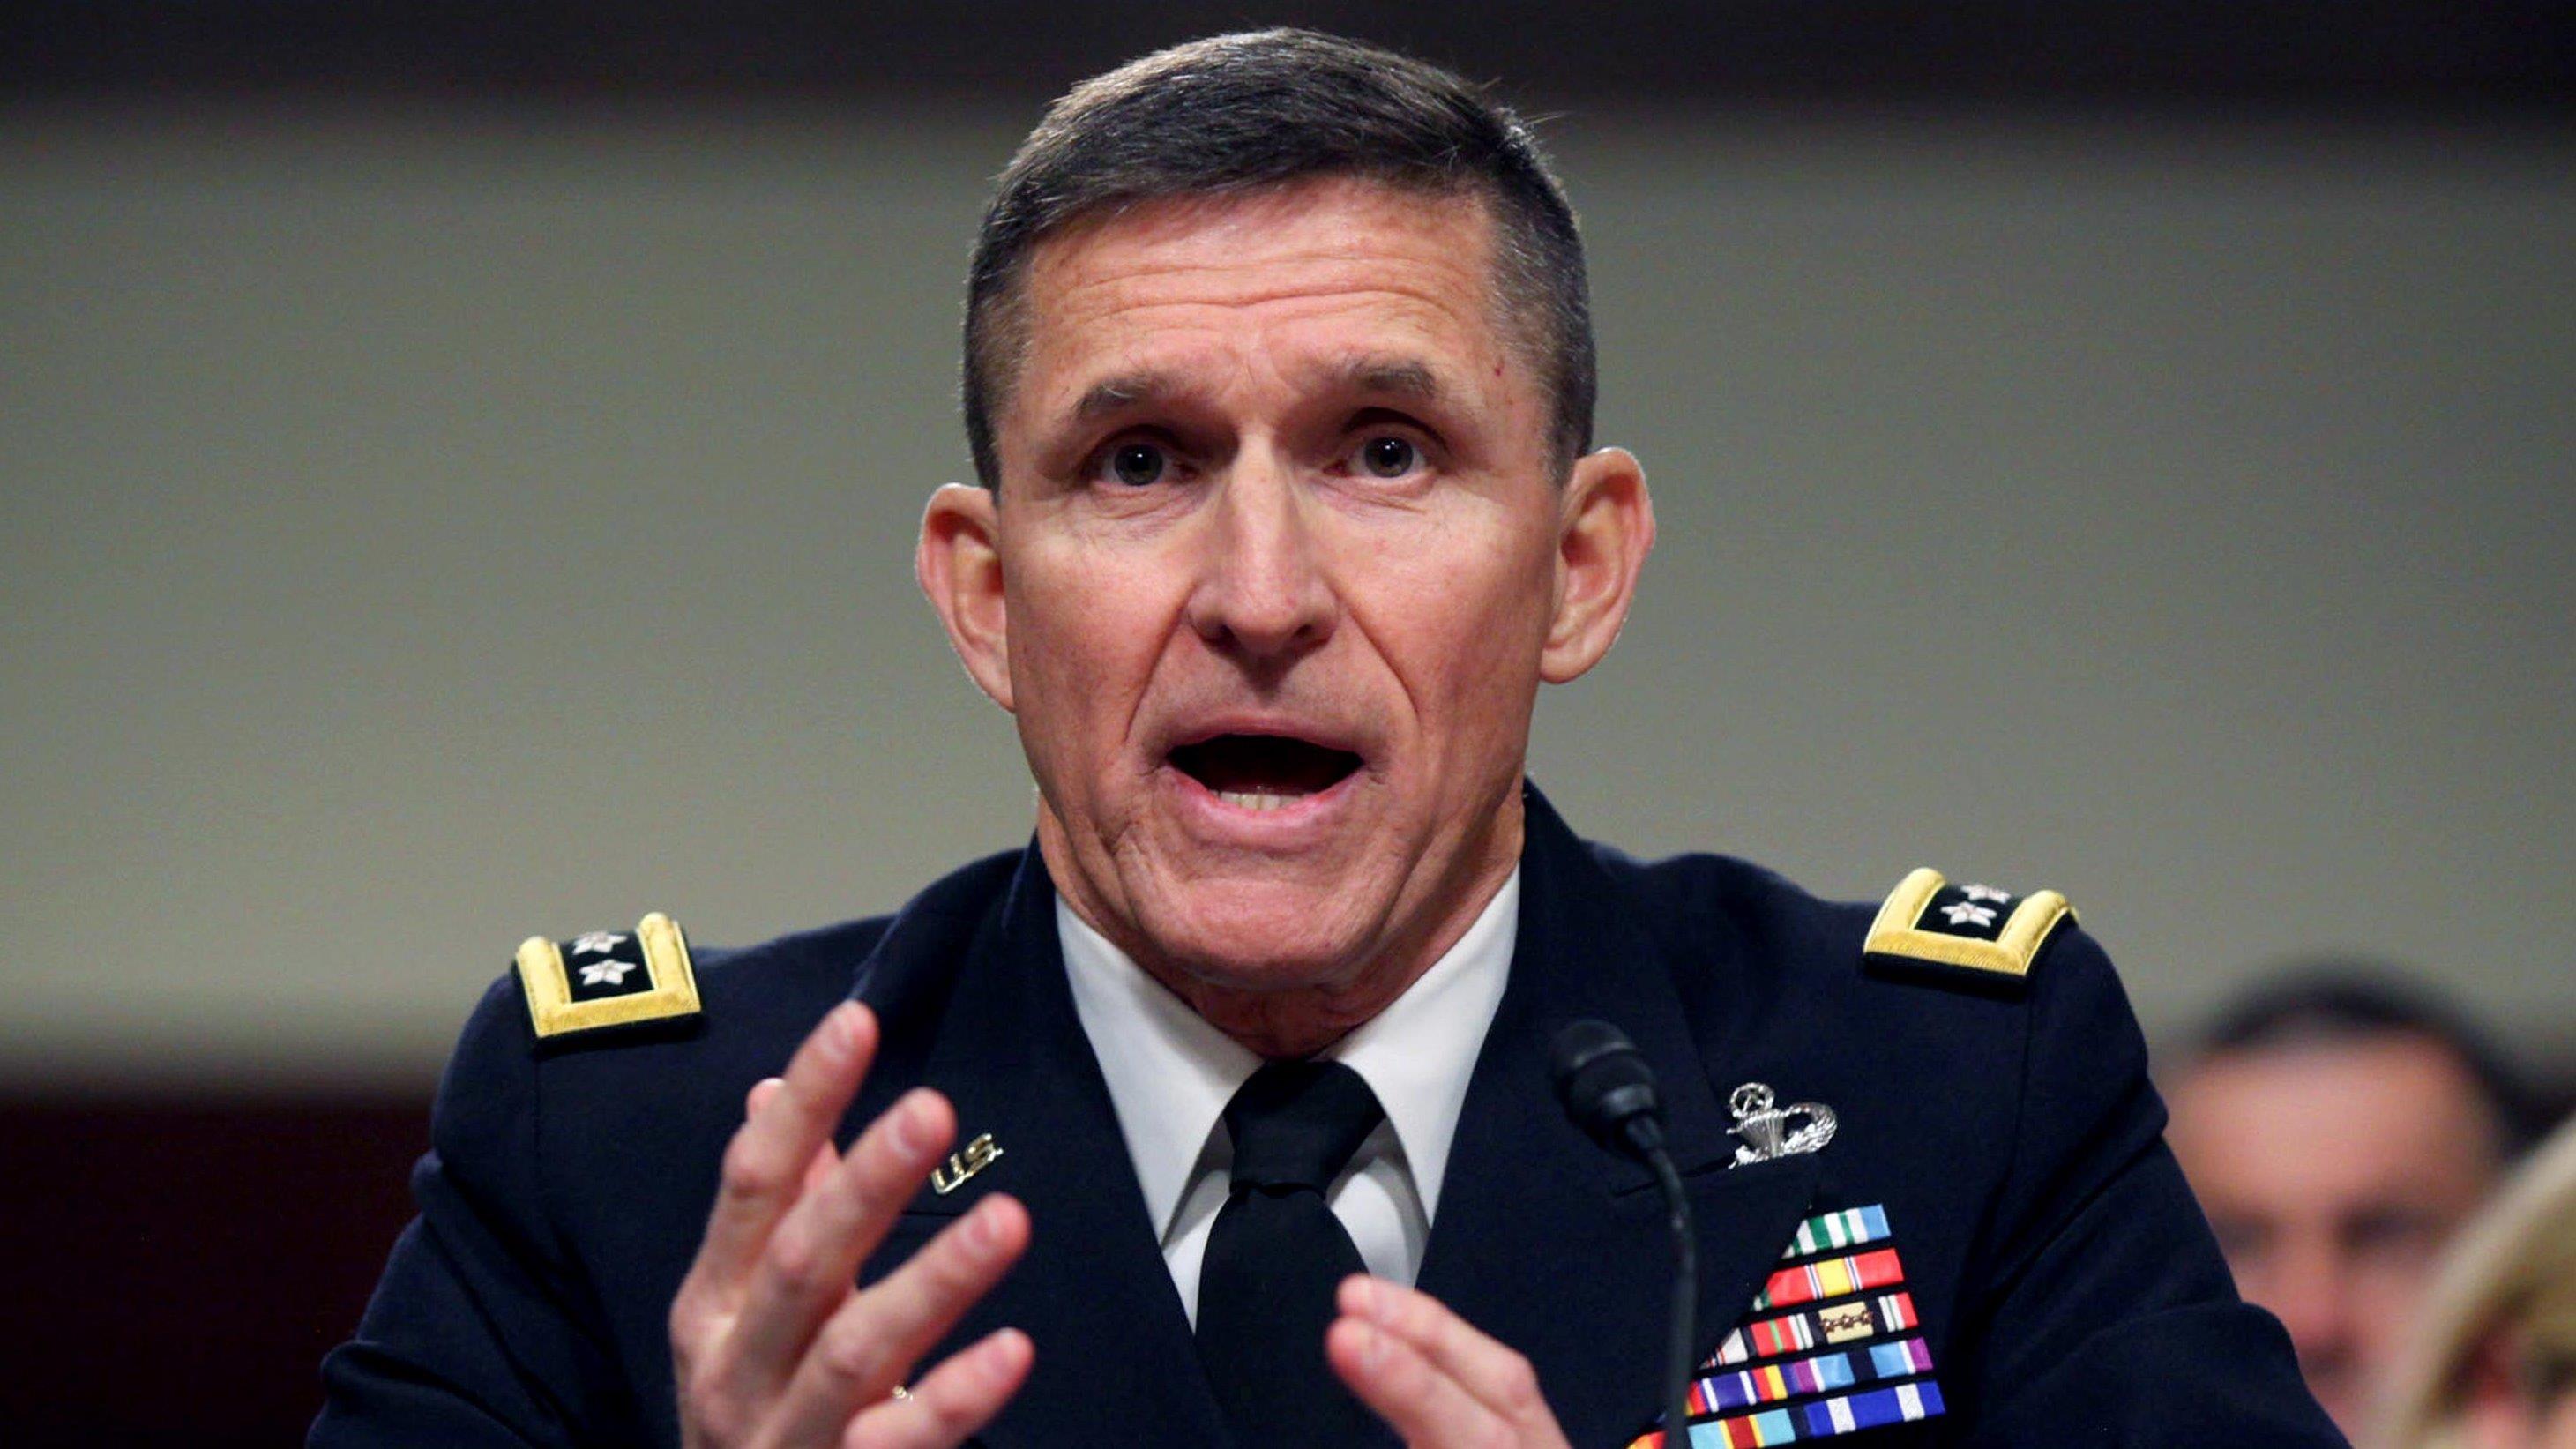 Lawmakers demand Flynn investigation, FBI leak assessment